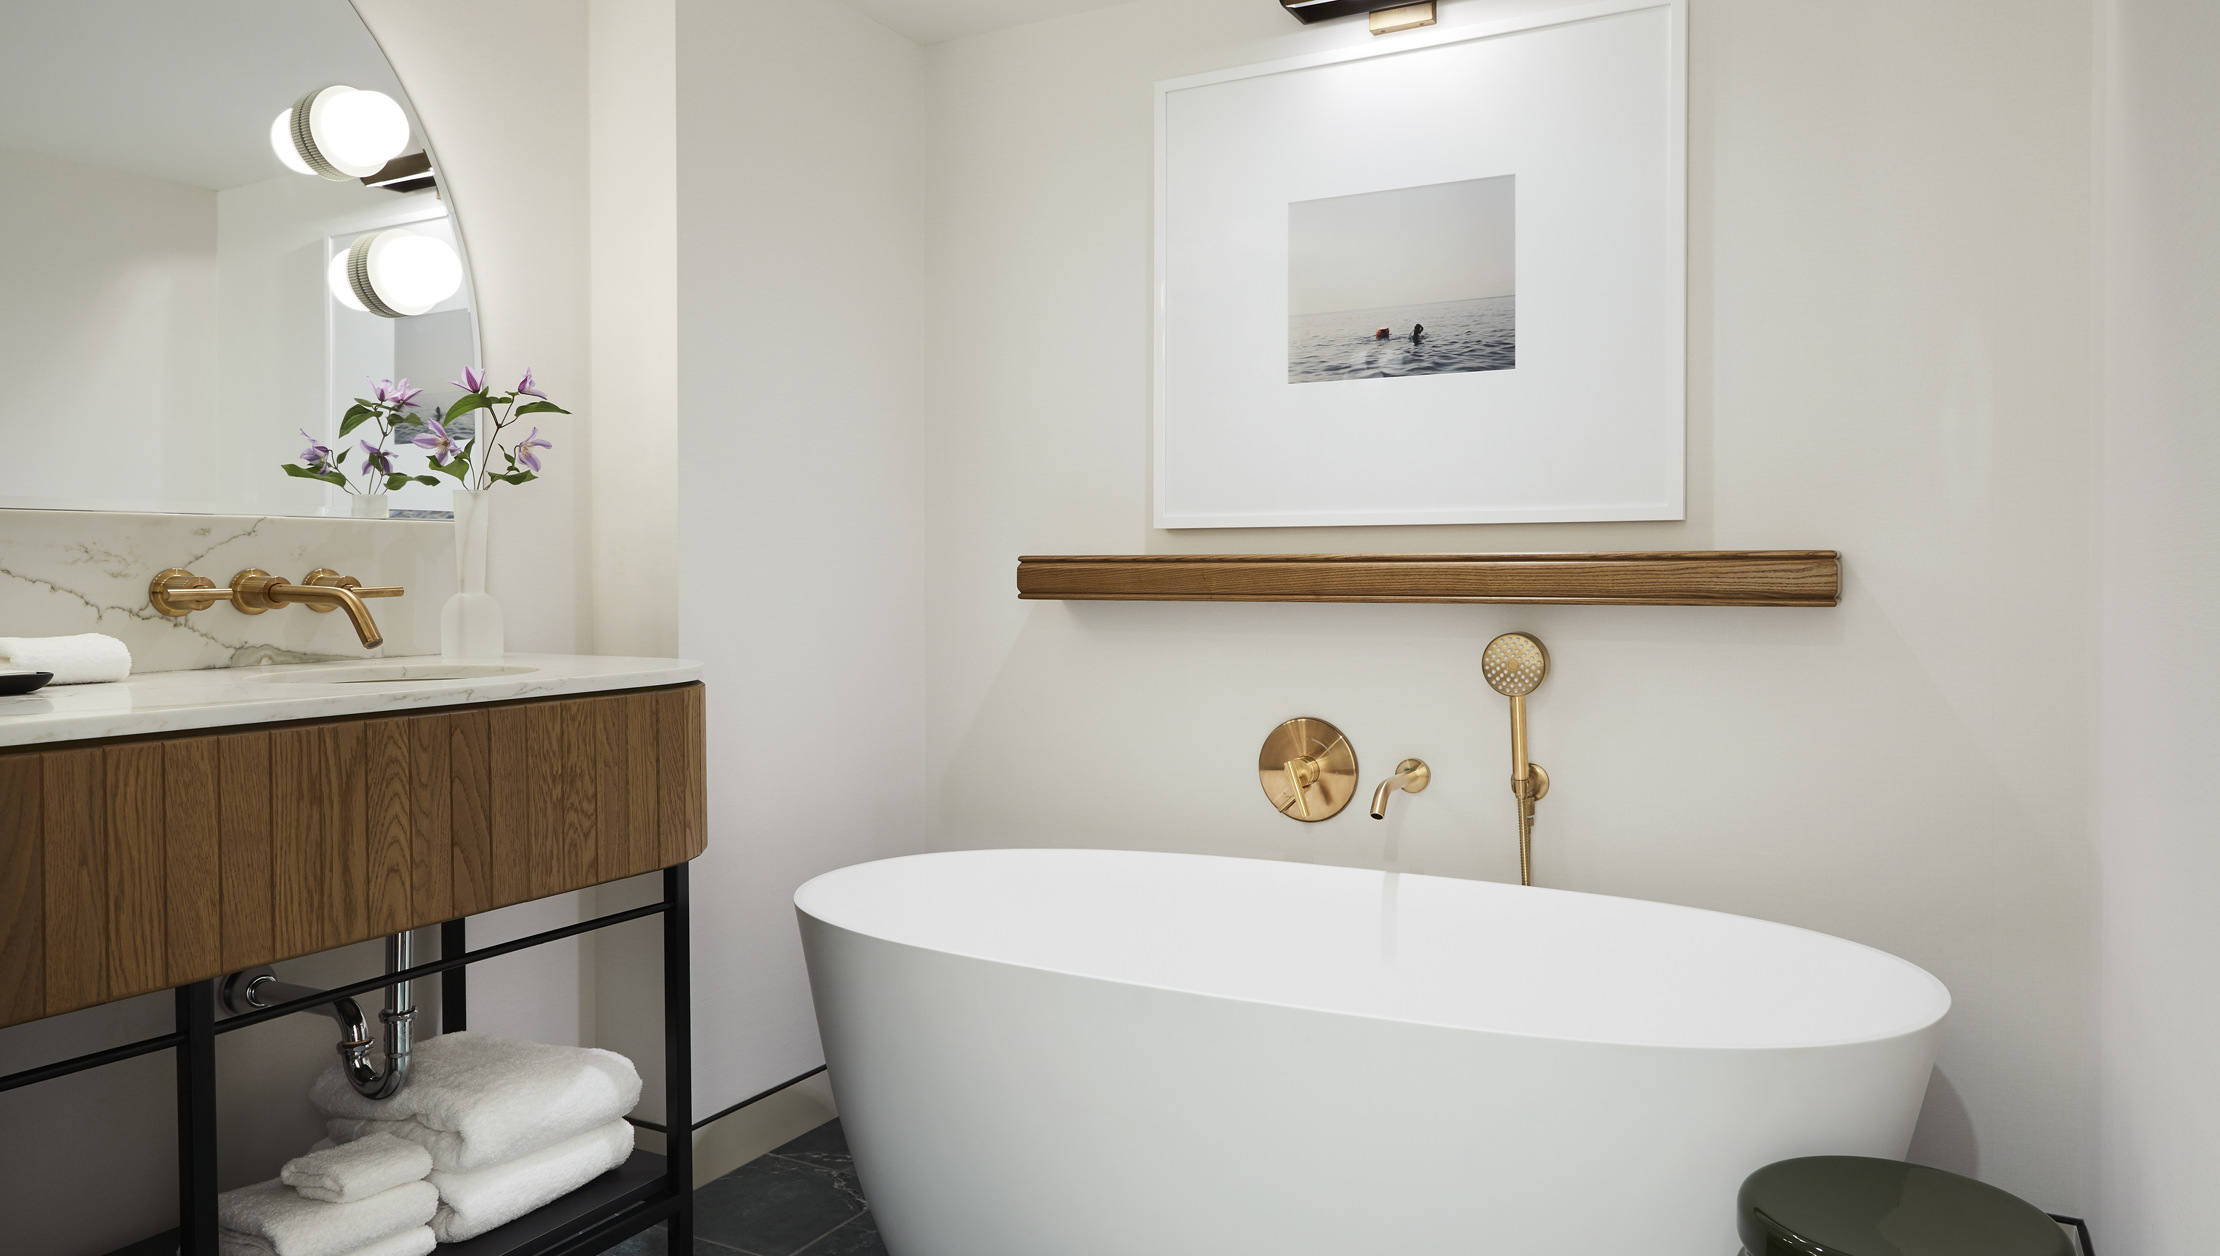 Photo of Kimpton Saint George suite bathroom with large bathing tub